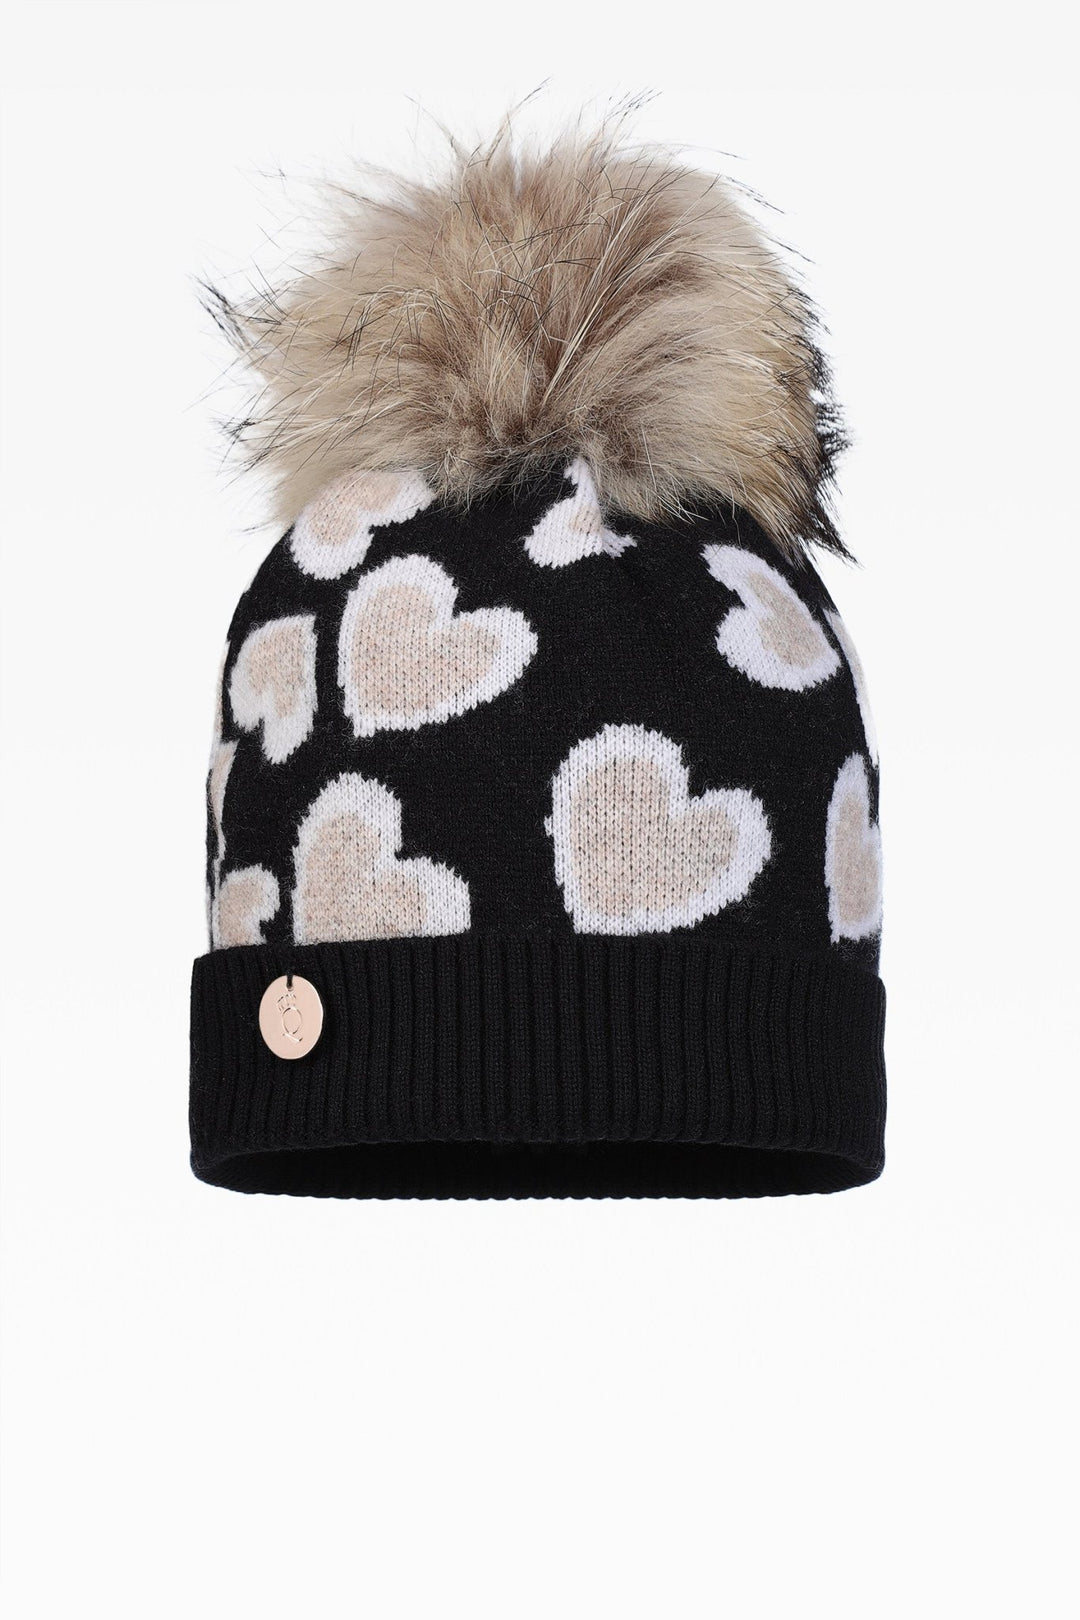 Lily Heart Pom Pom Hat - Real Fur - Dunedin Cashmere